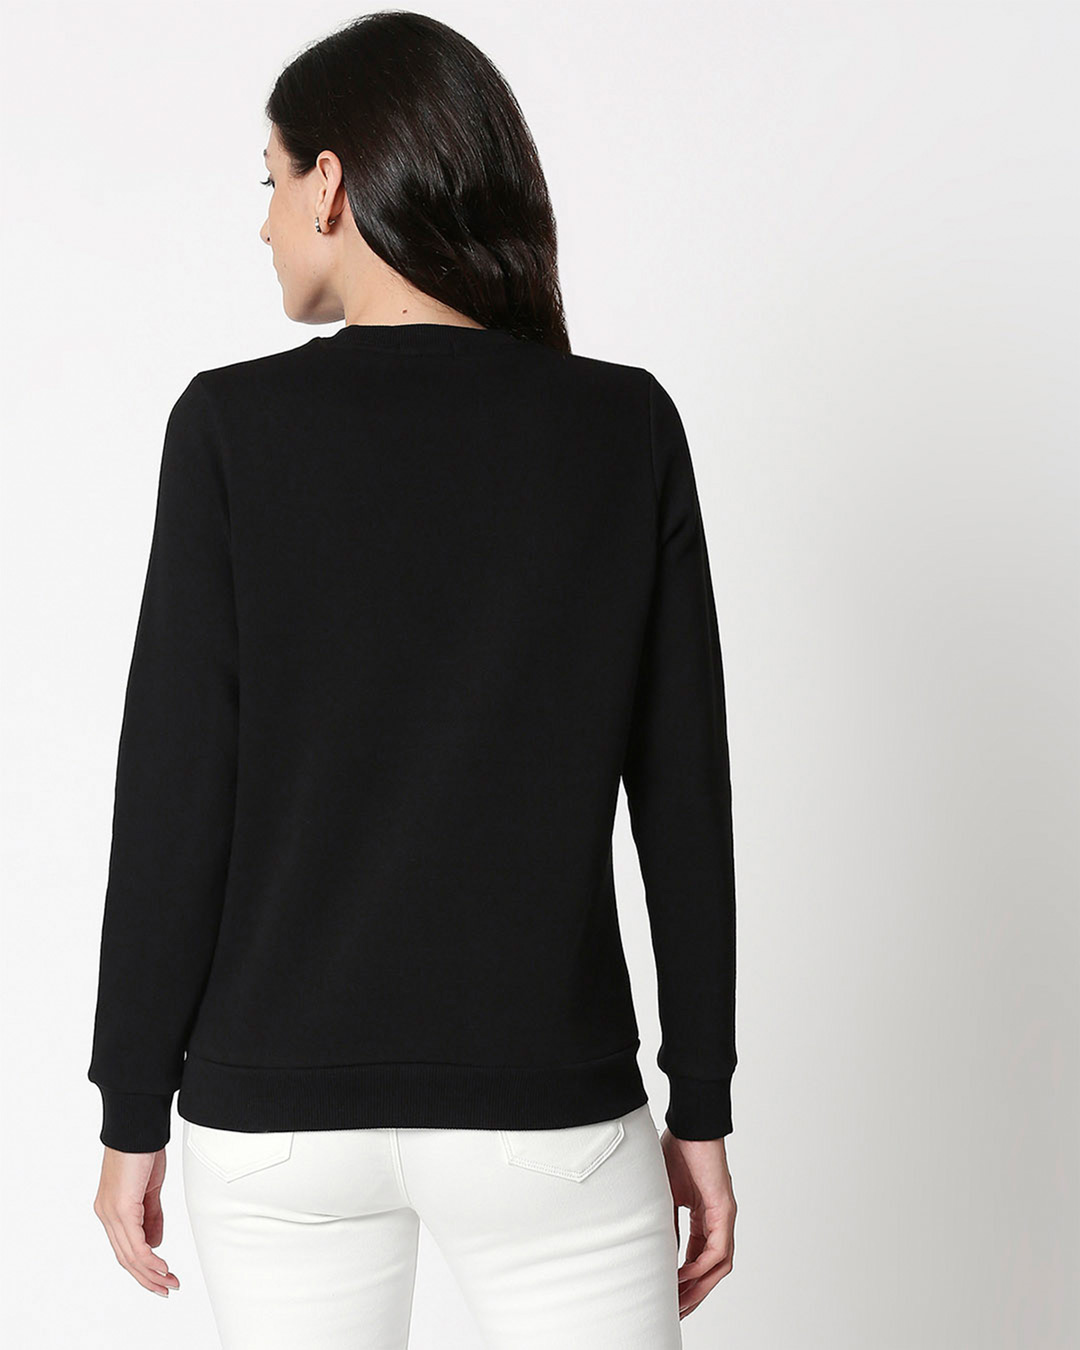 Shop The World Will Adjust Fleece Sweatshirt Black-Back